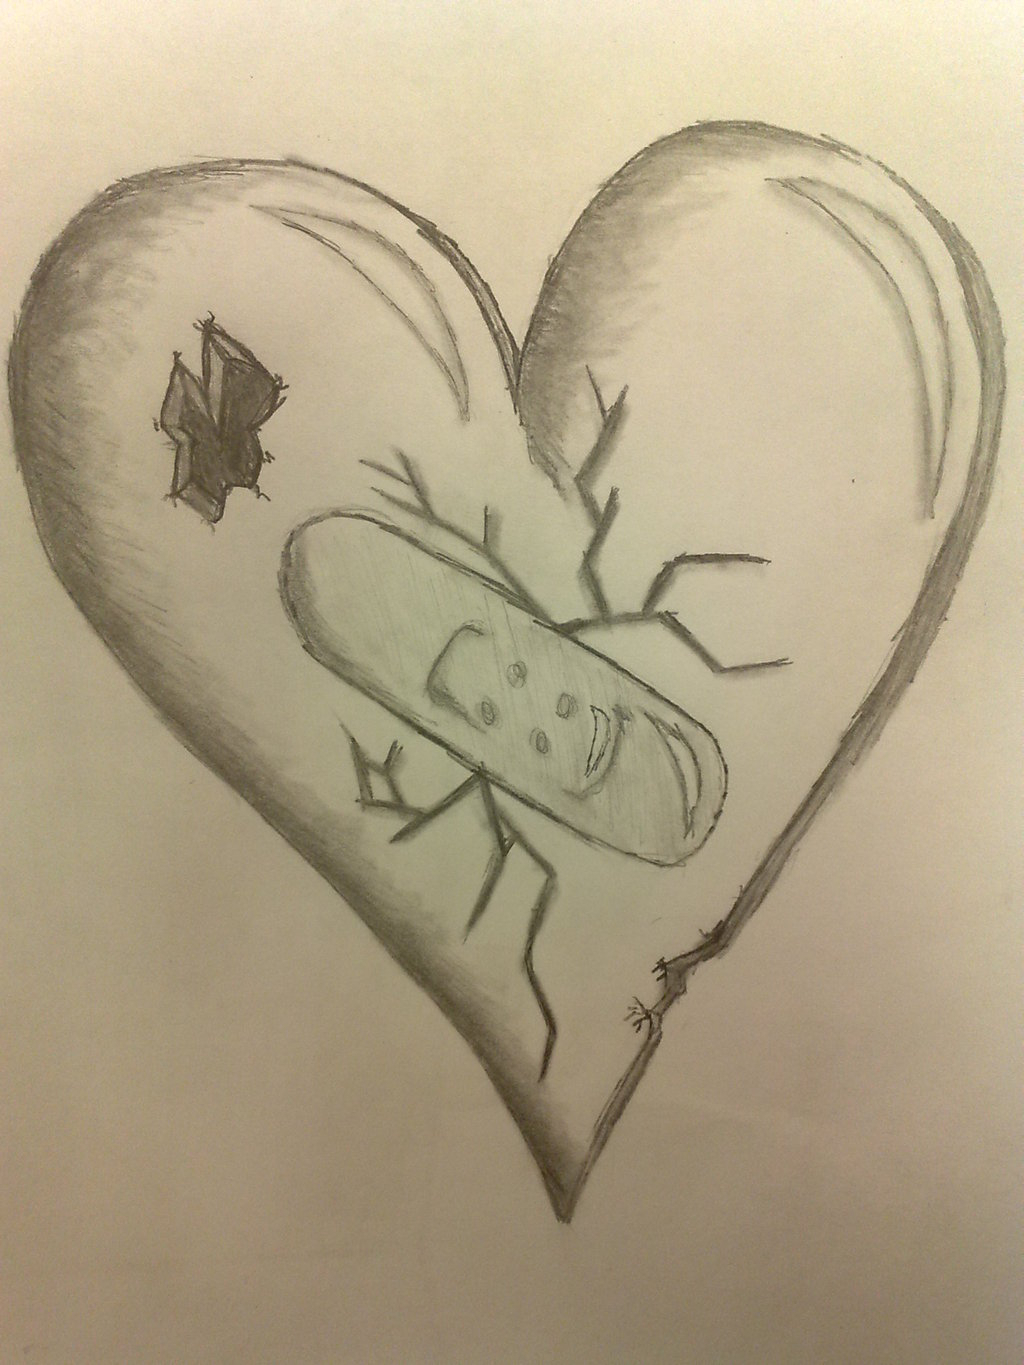 broken-heart-pencil-drawing-at-getdrawings-free-download